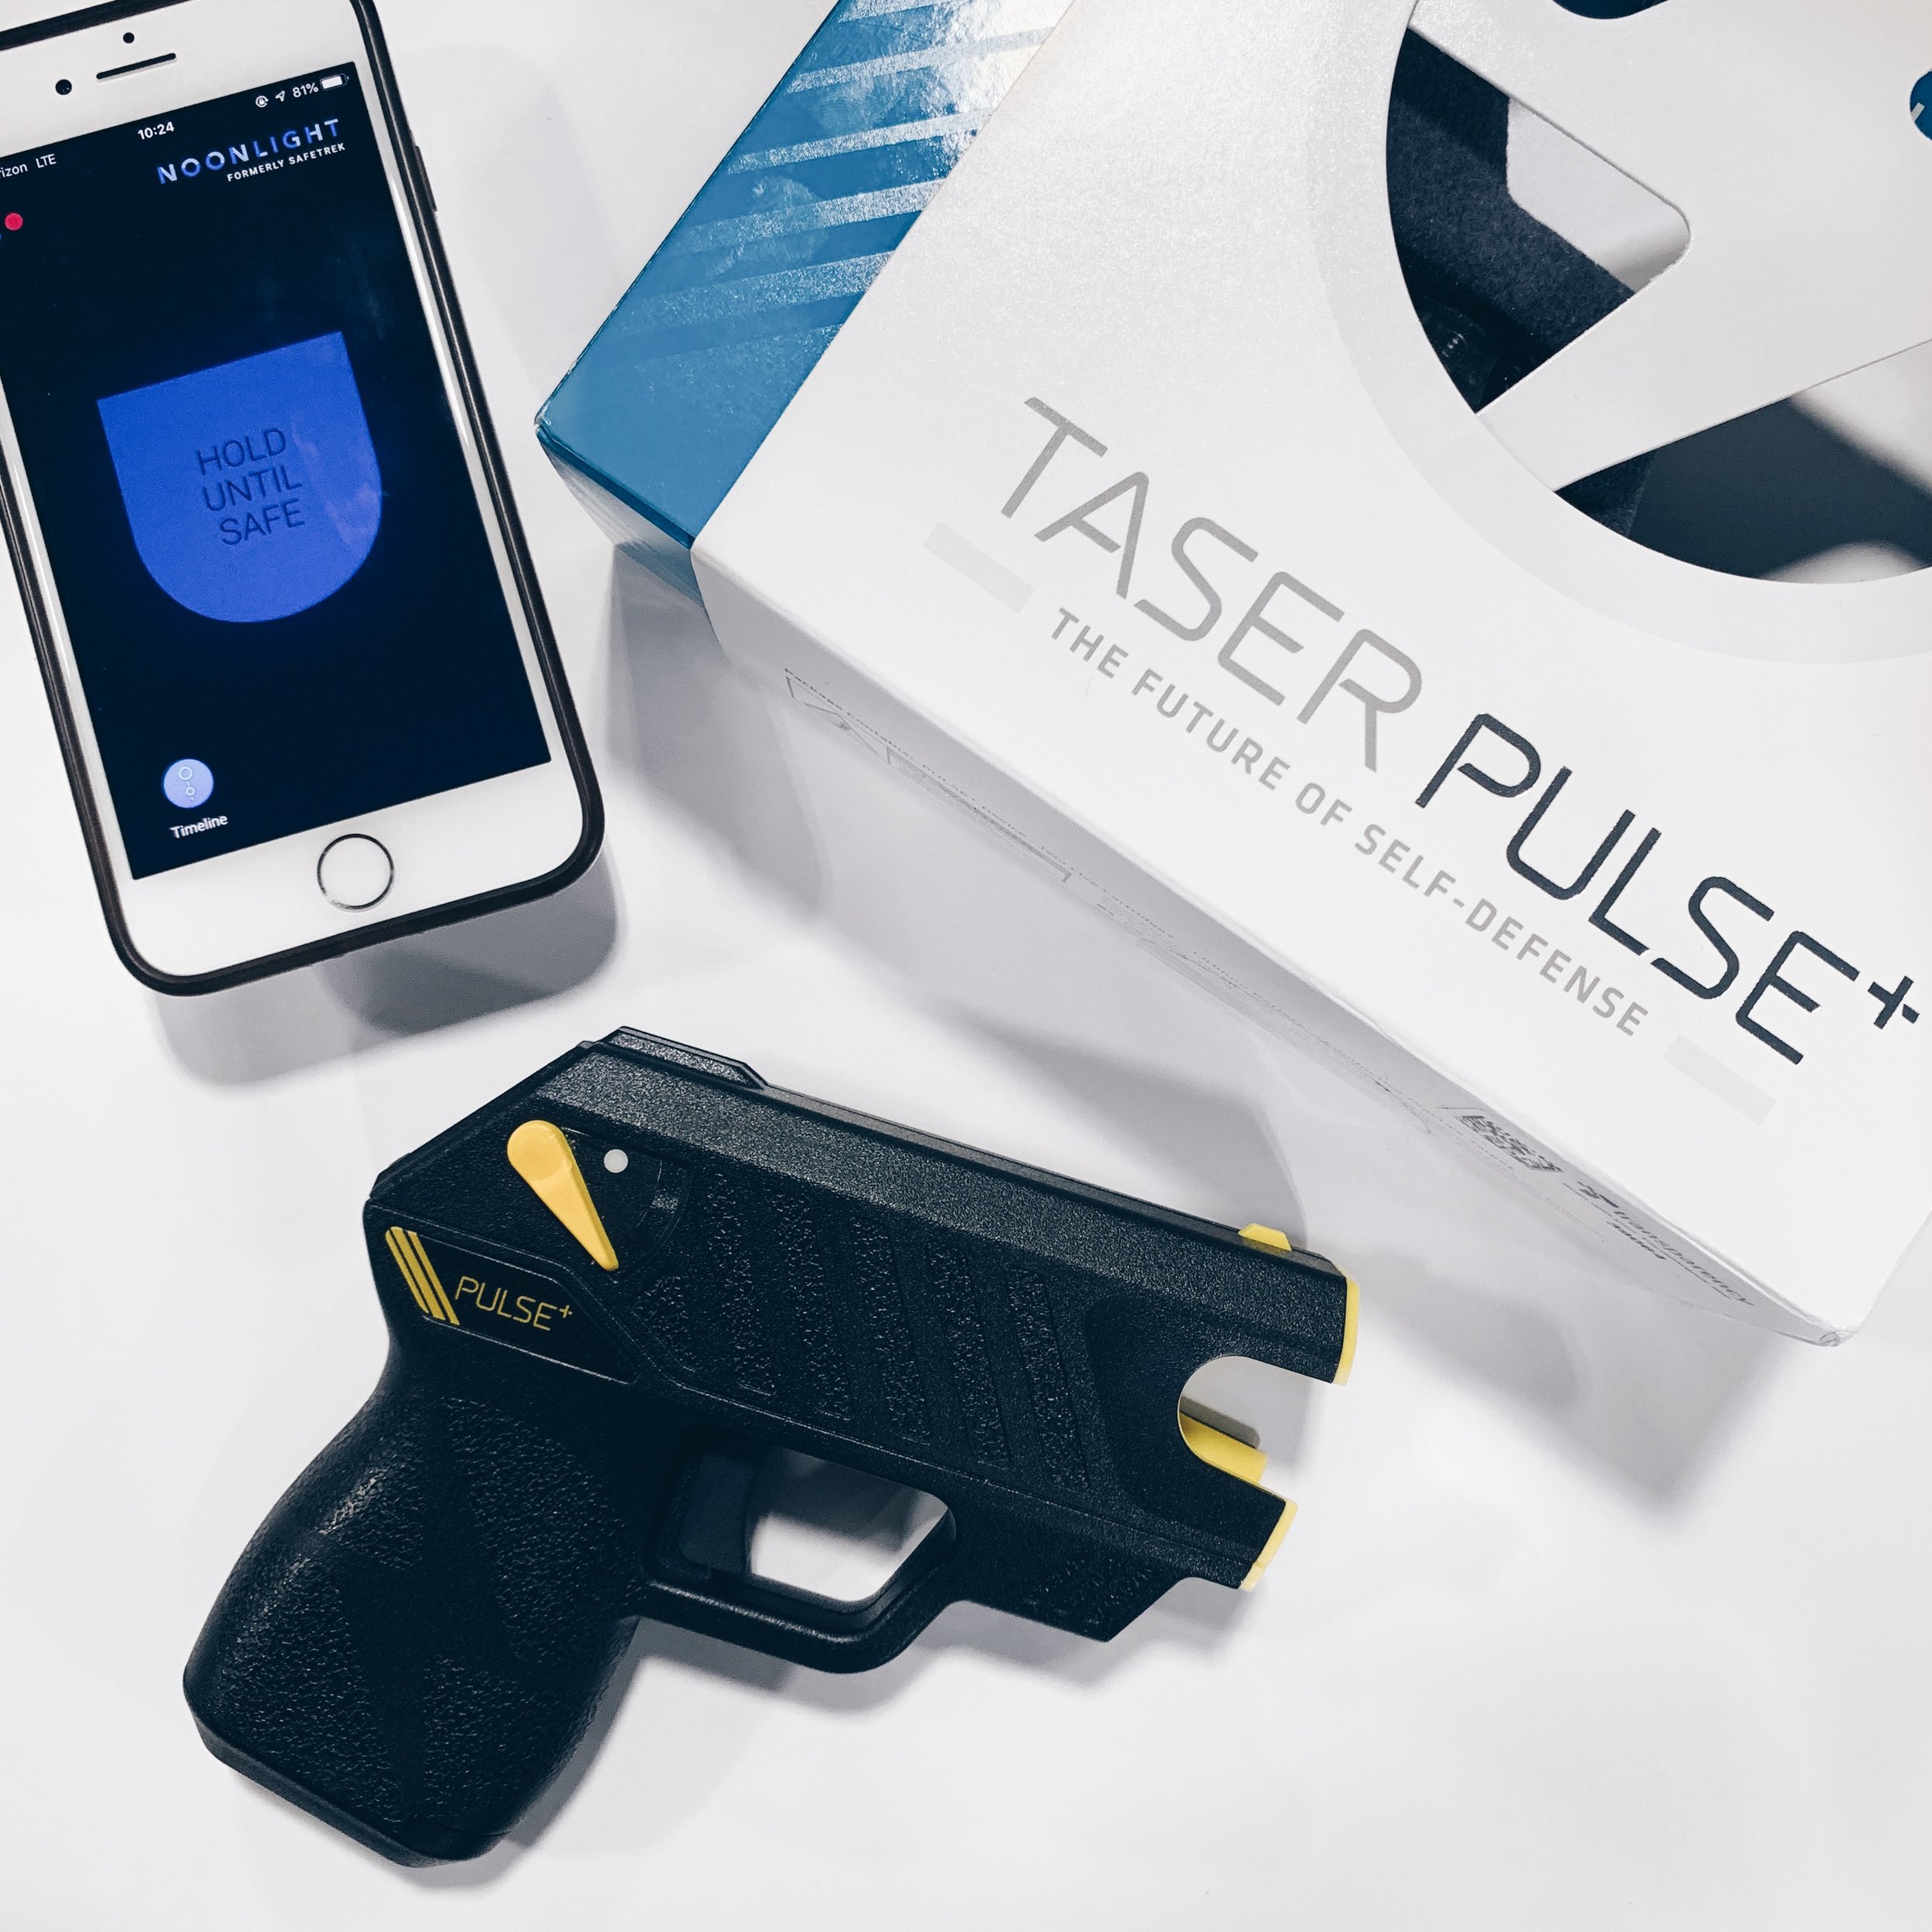 Less Lethal TASER Pulse Review